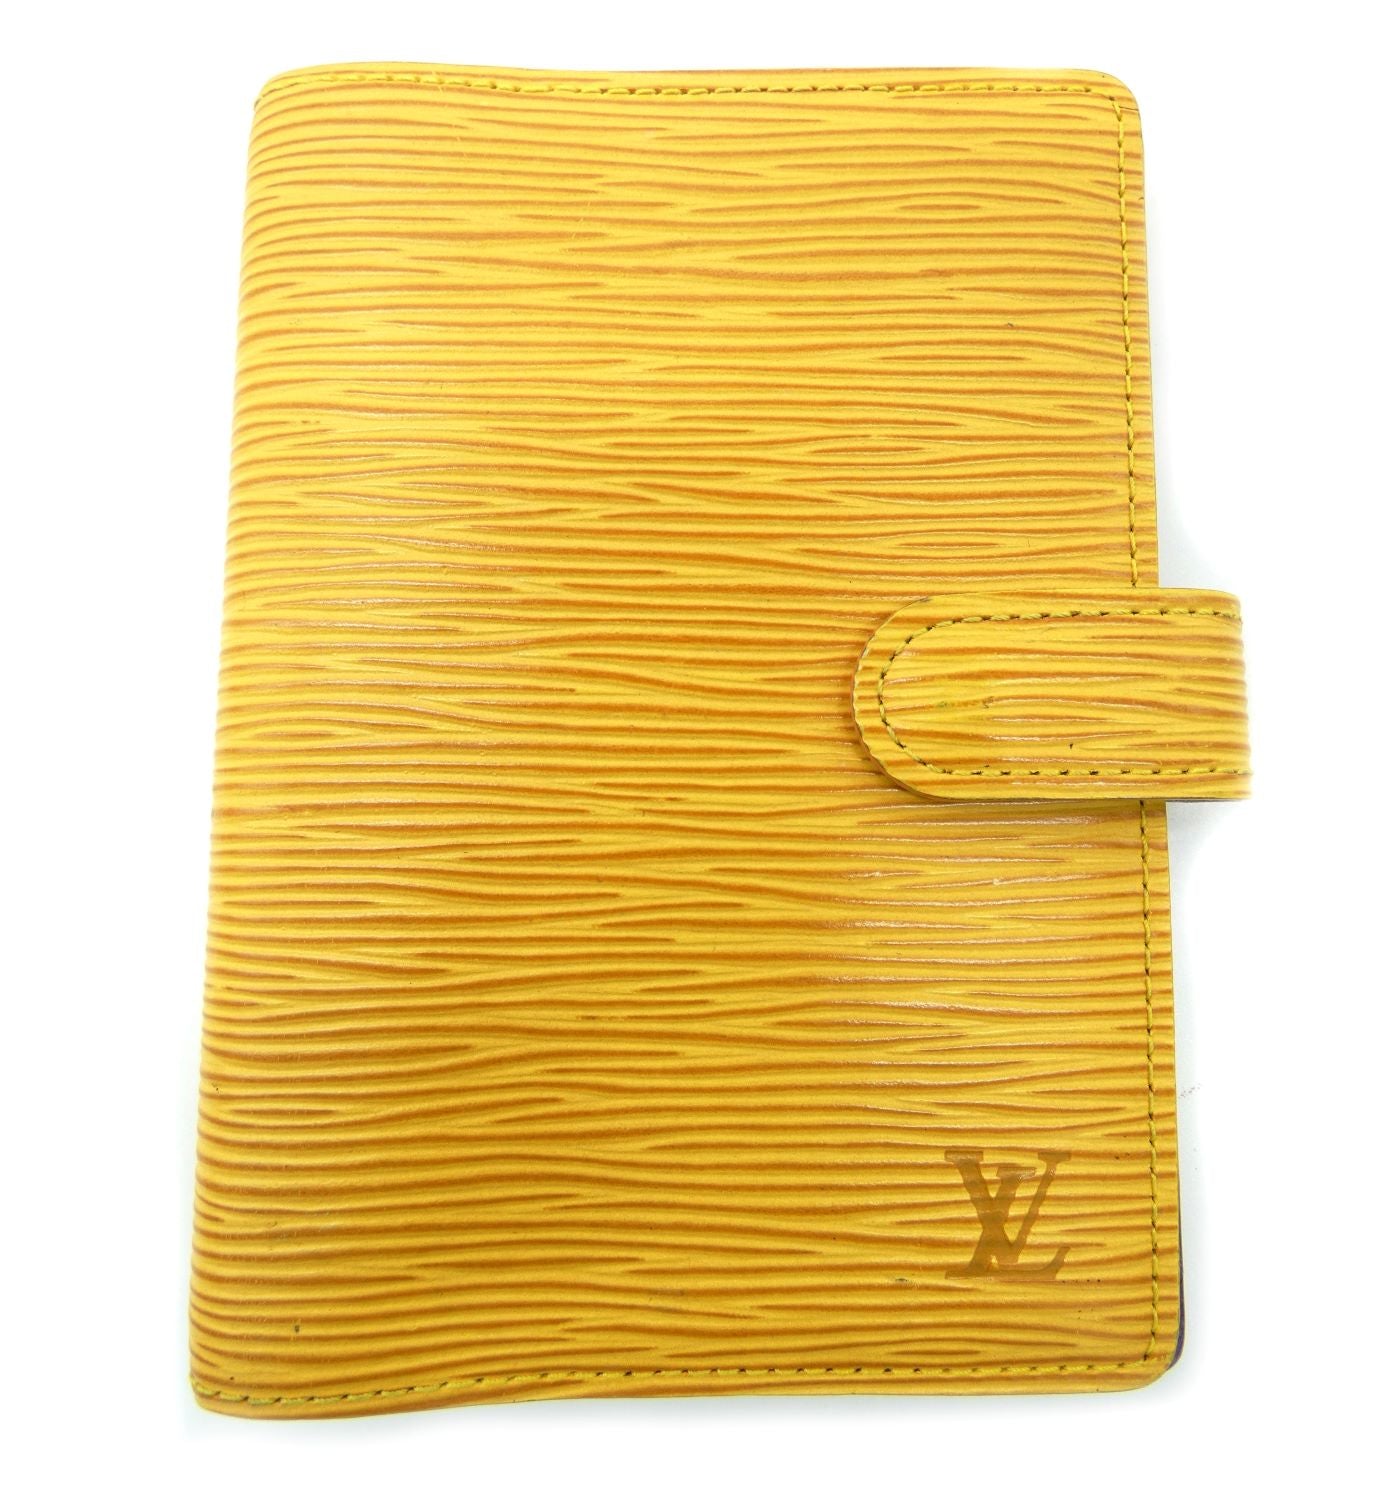 Louis Vuitton Yellow Epi Agenda Wallet Louis Vuitton